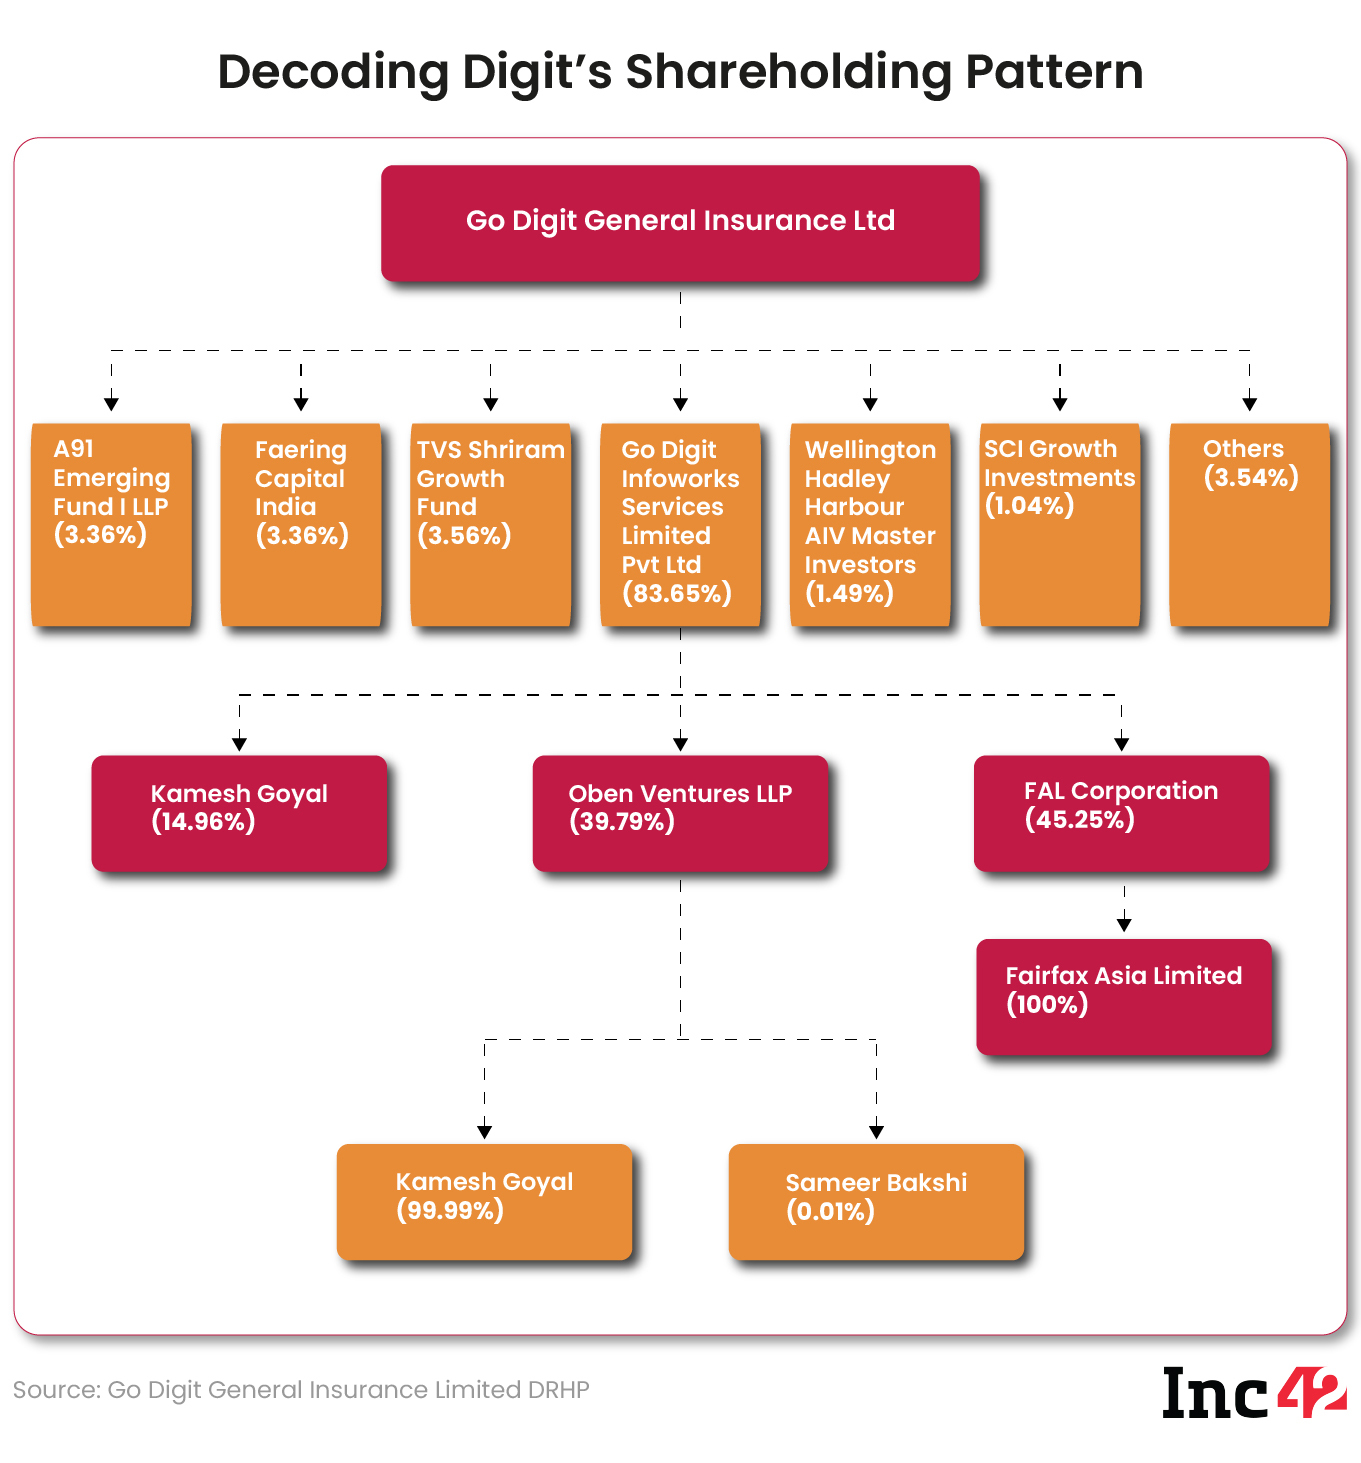 Decoding Digit's Shareholding Pattern